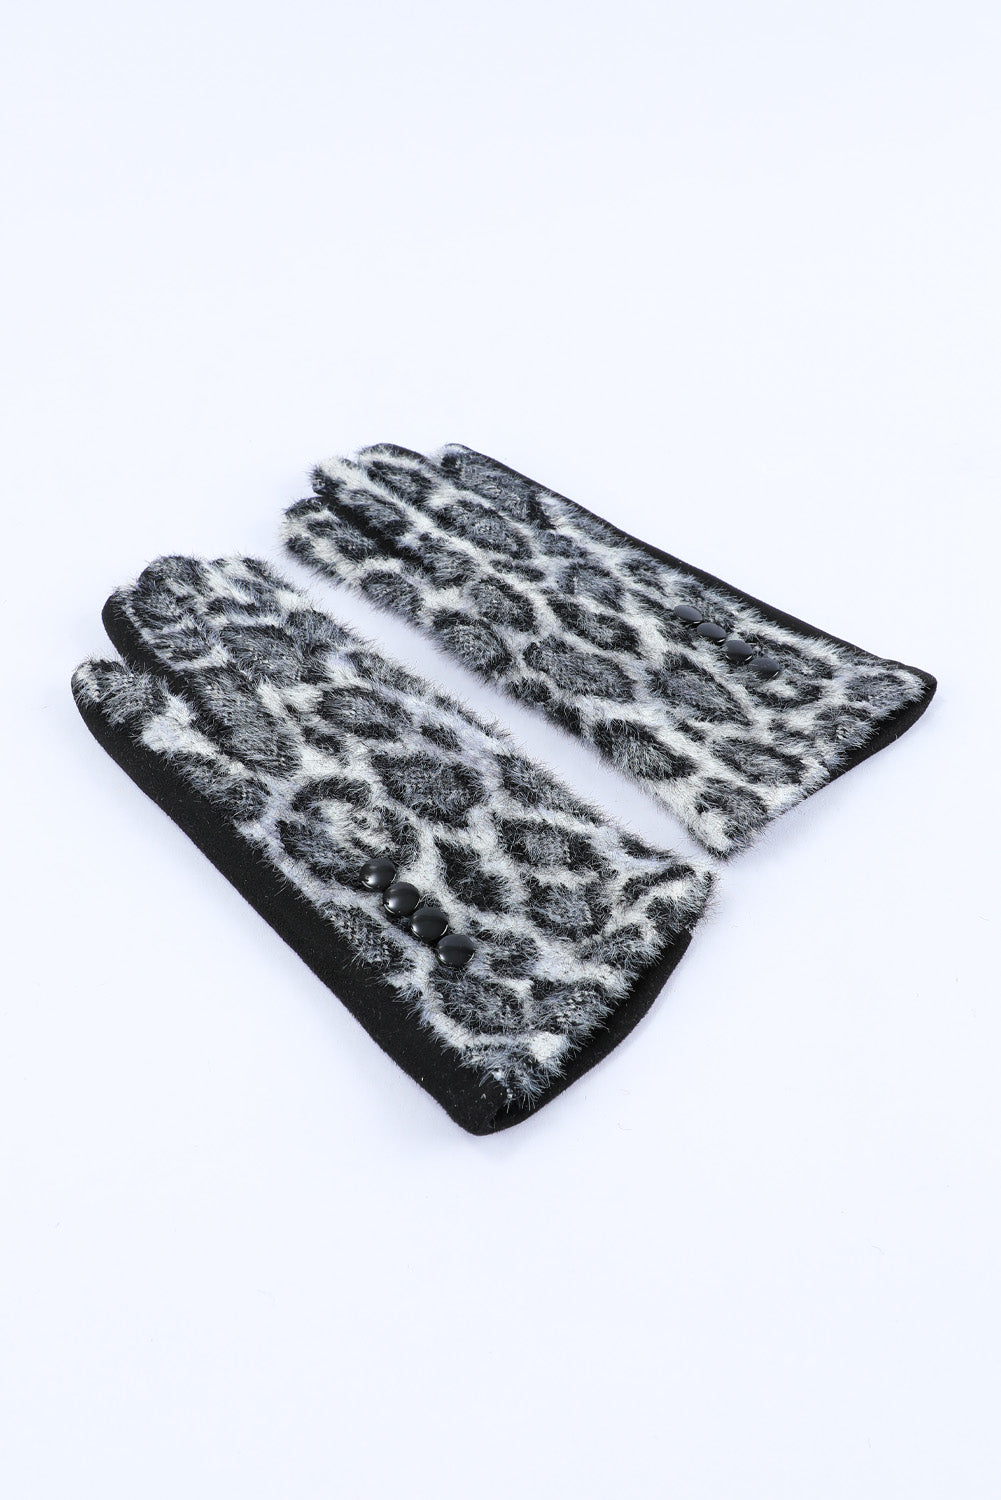 Black Studded Furry Leopard Gloves